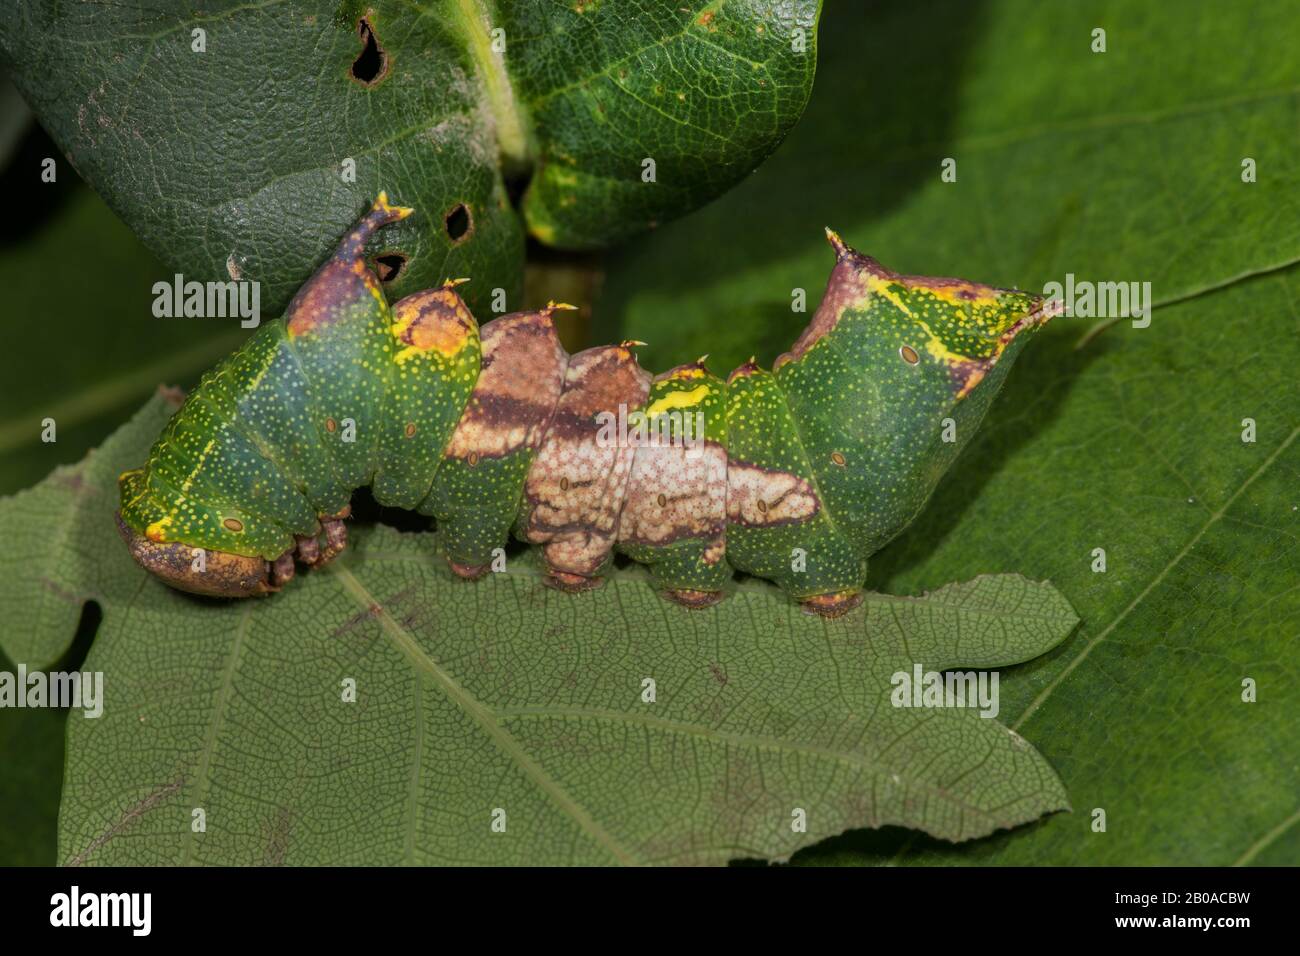 Tawny prominent (Harpyia milhauseri, Hybocampa milhauseri, Hoplitis milhauseri), Raupe auf dem Eichenblatt, Deutschland Stockfoto